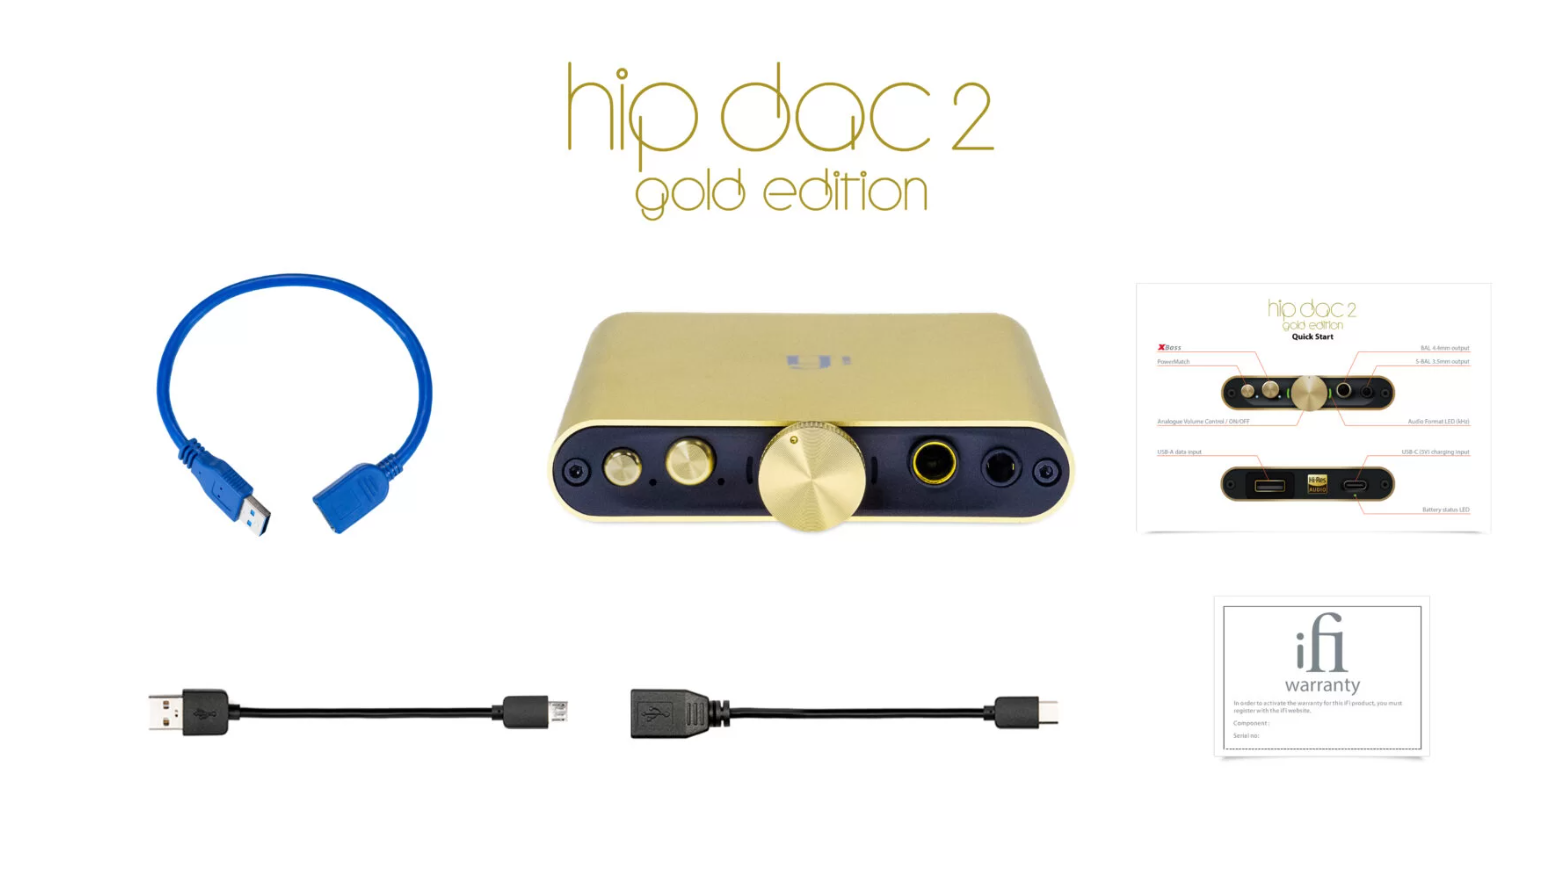 IFI Hip Dac 2 Gold Edition convertitore amp-cuffie PCM e DXD fino a 384kHz DSD256